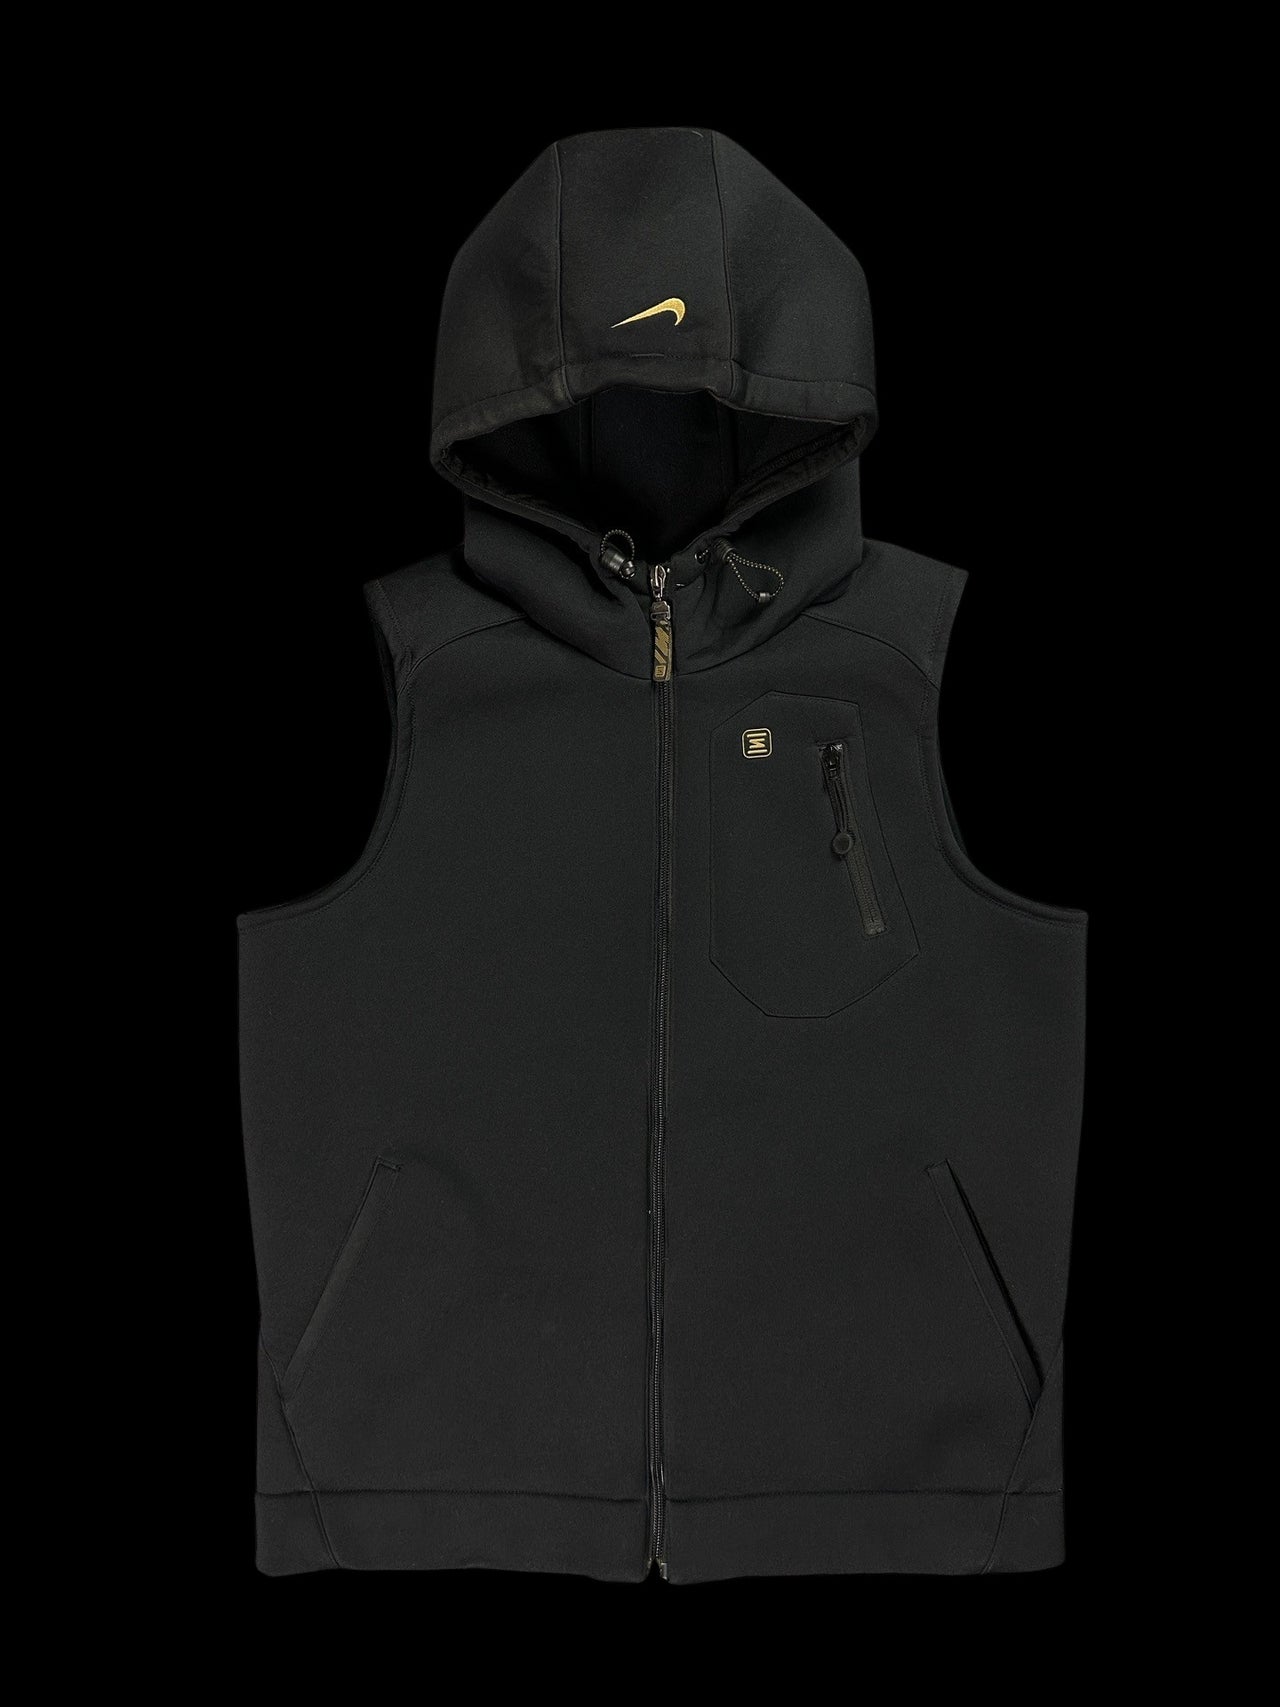 Nike Shox Vest (M)